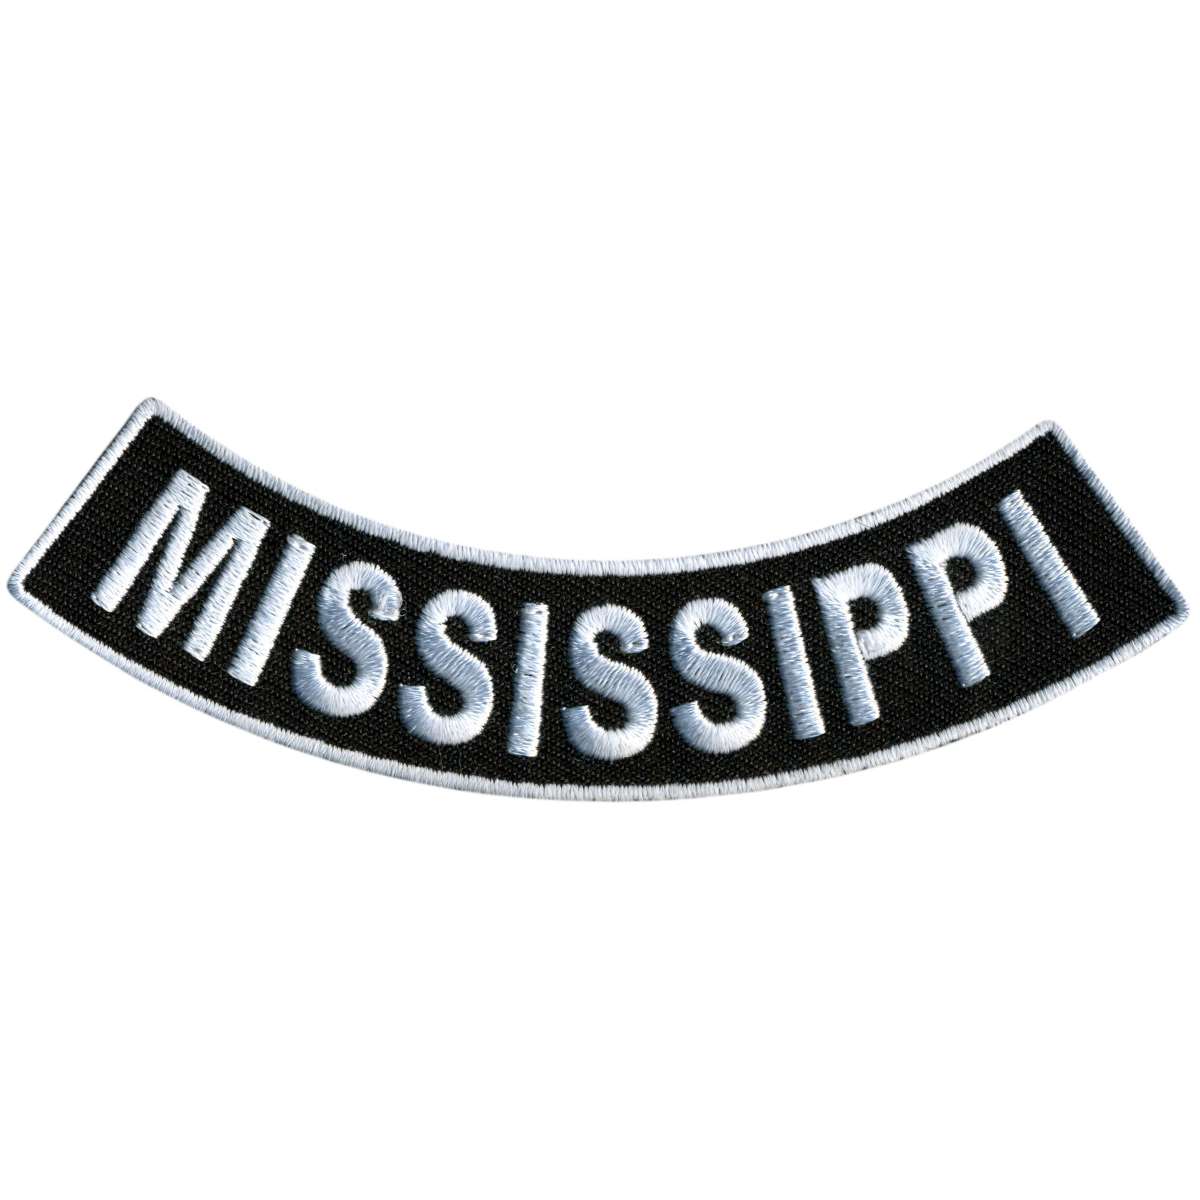 Hot Leathers Mississippi 4” X 1” Bottom Rocker Patch PPM5048